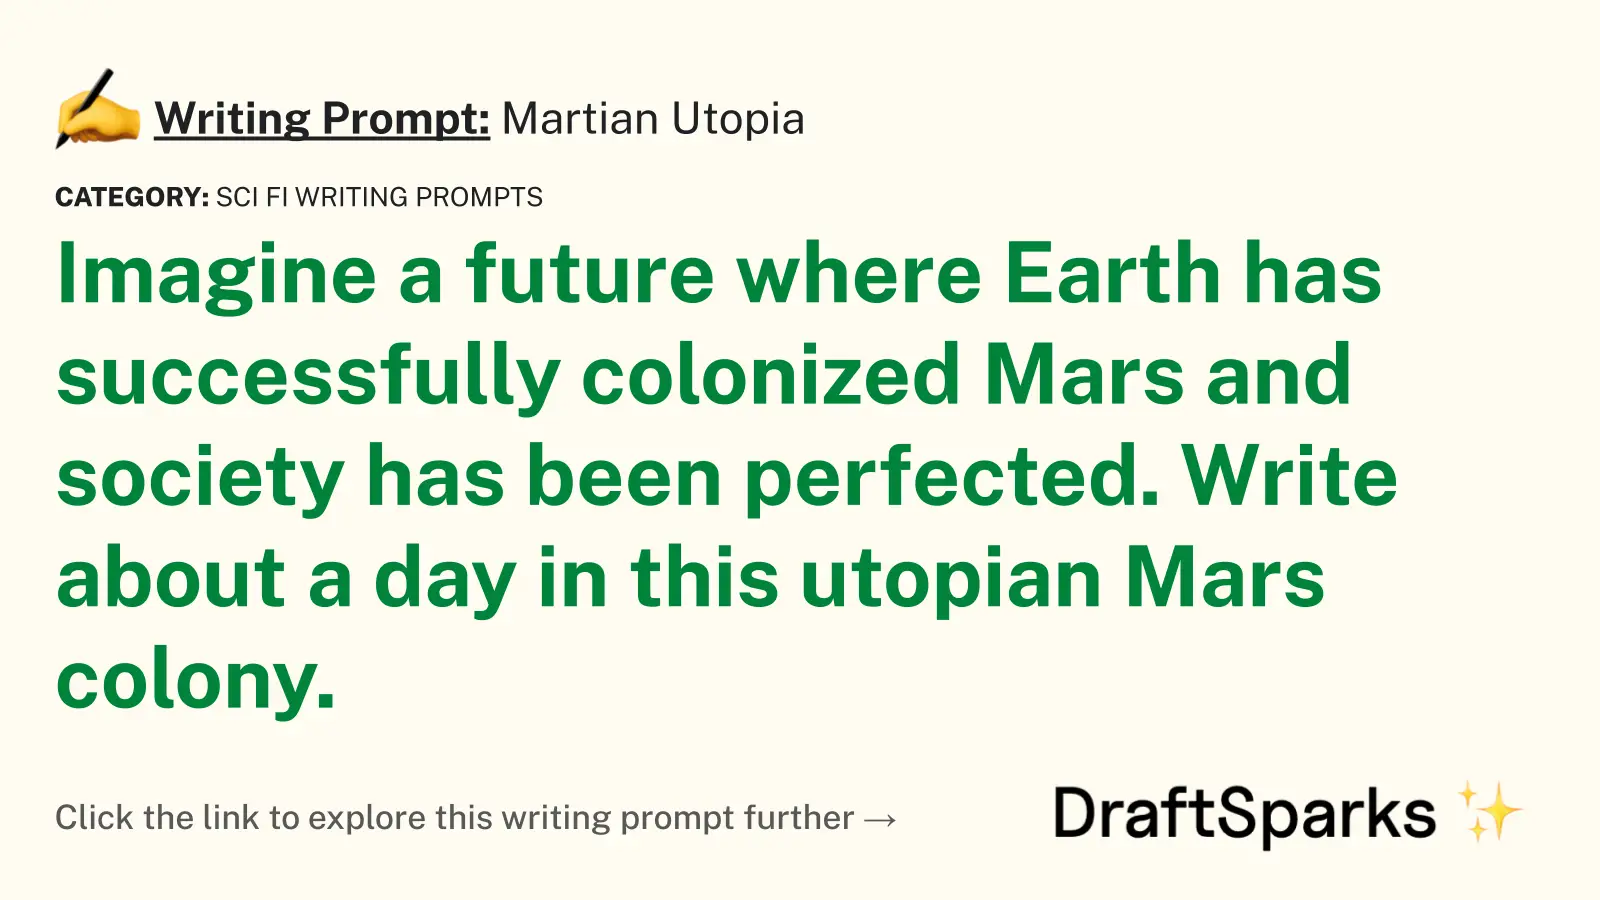 Martian Utopia